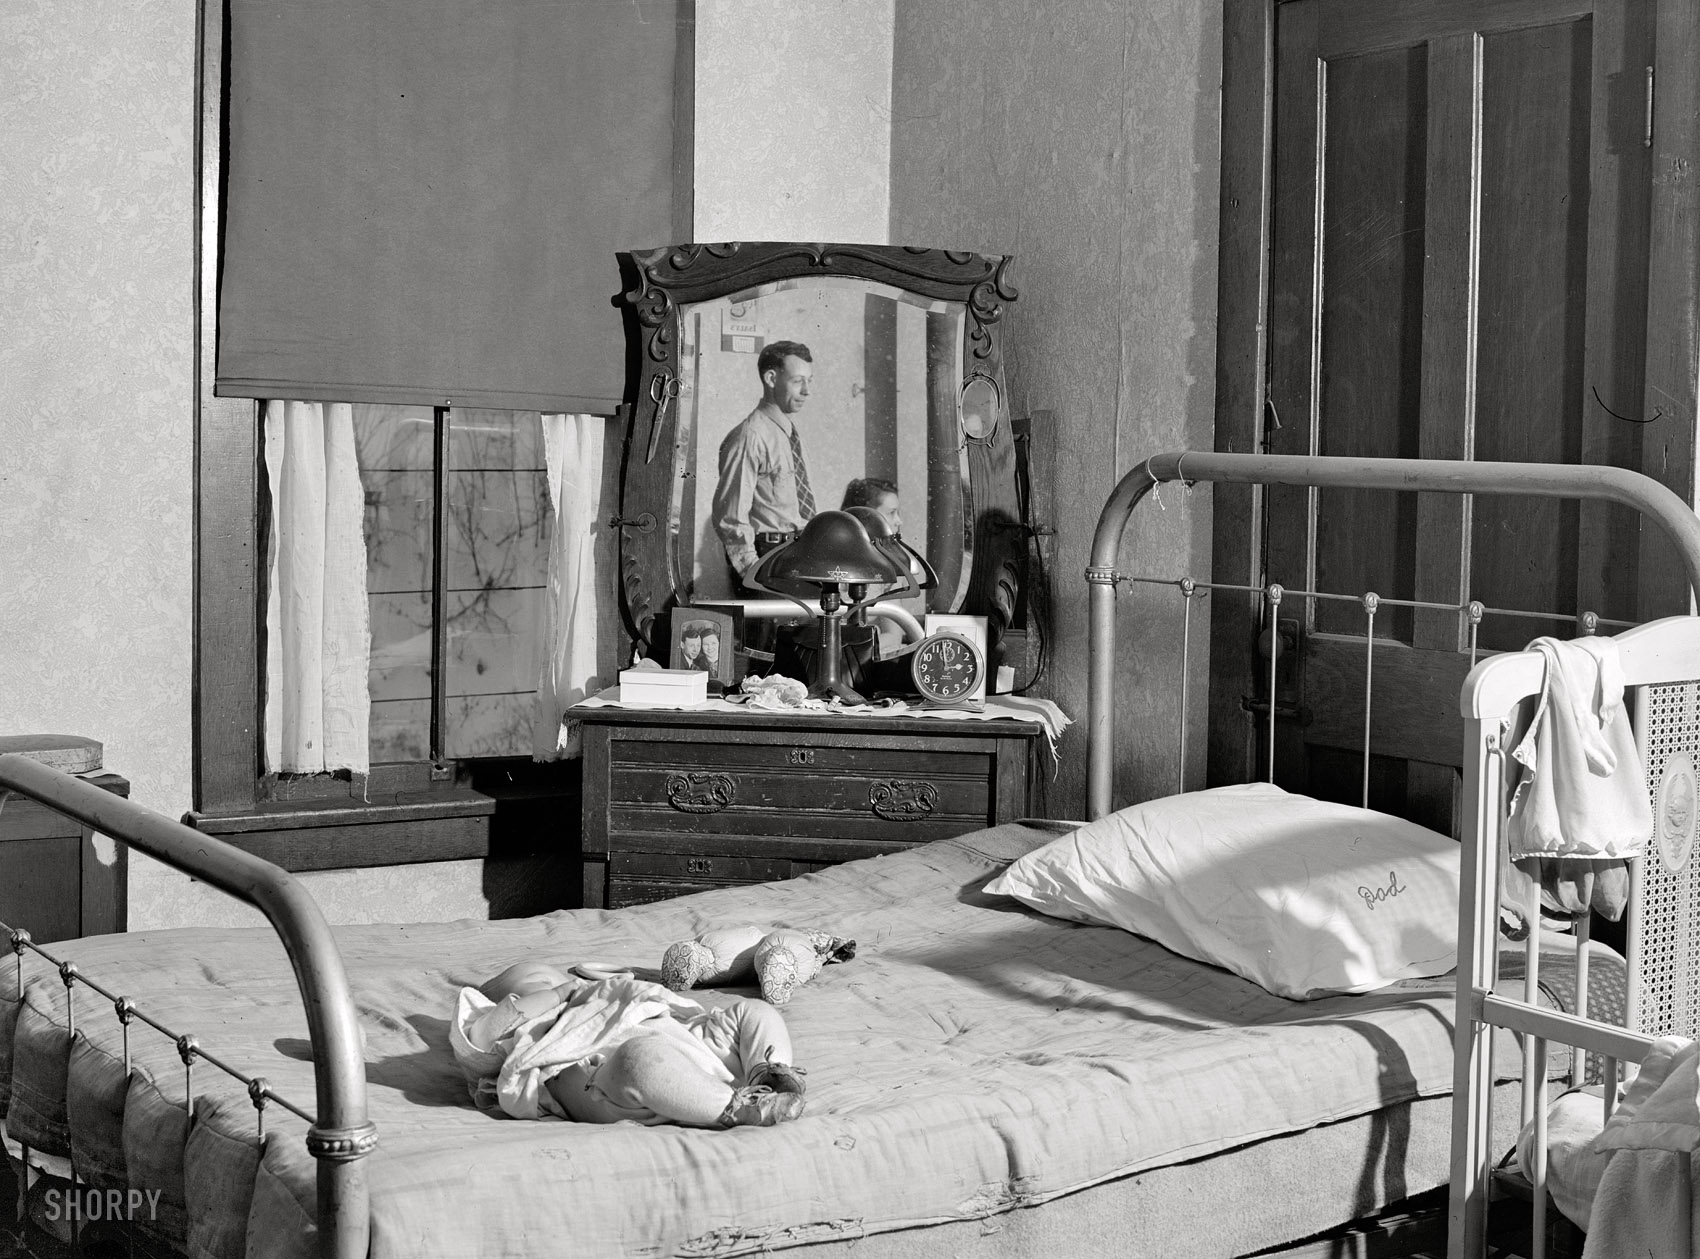 January 1940. "Family living in a 'crackerbox' slum tenement in Beaver Falls, Pennsylvania." Medium-format nitrate negative by Jack Delano. View full size.